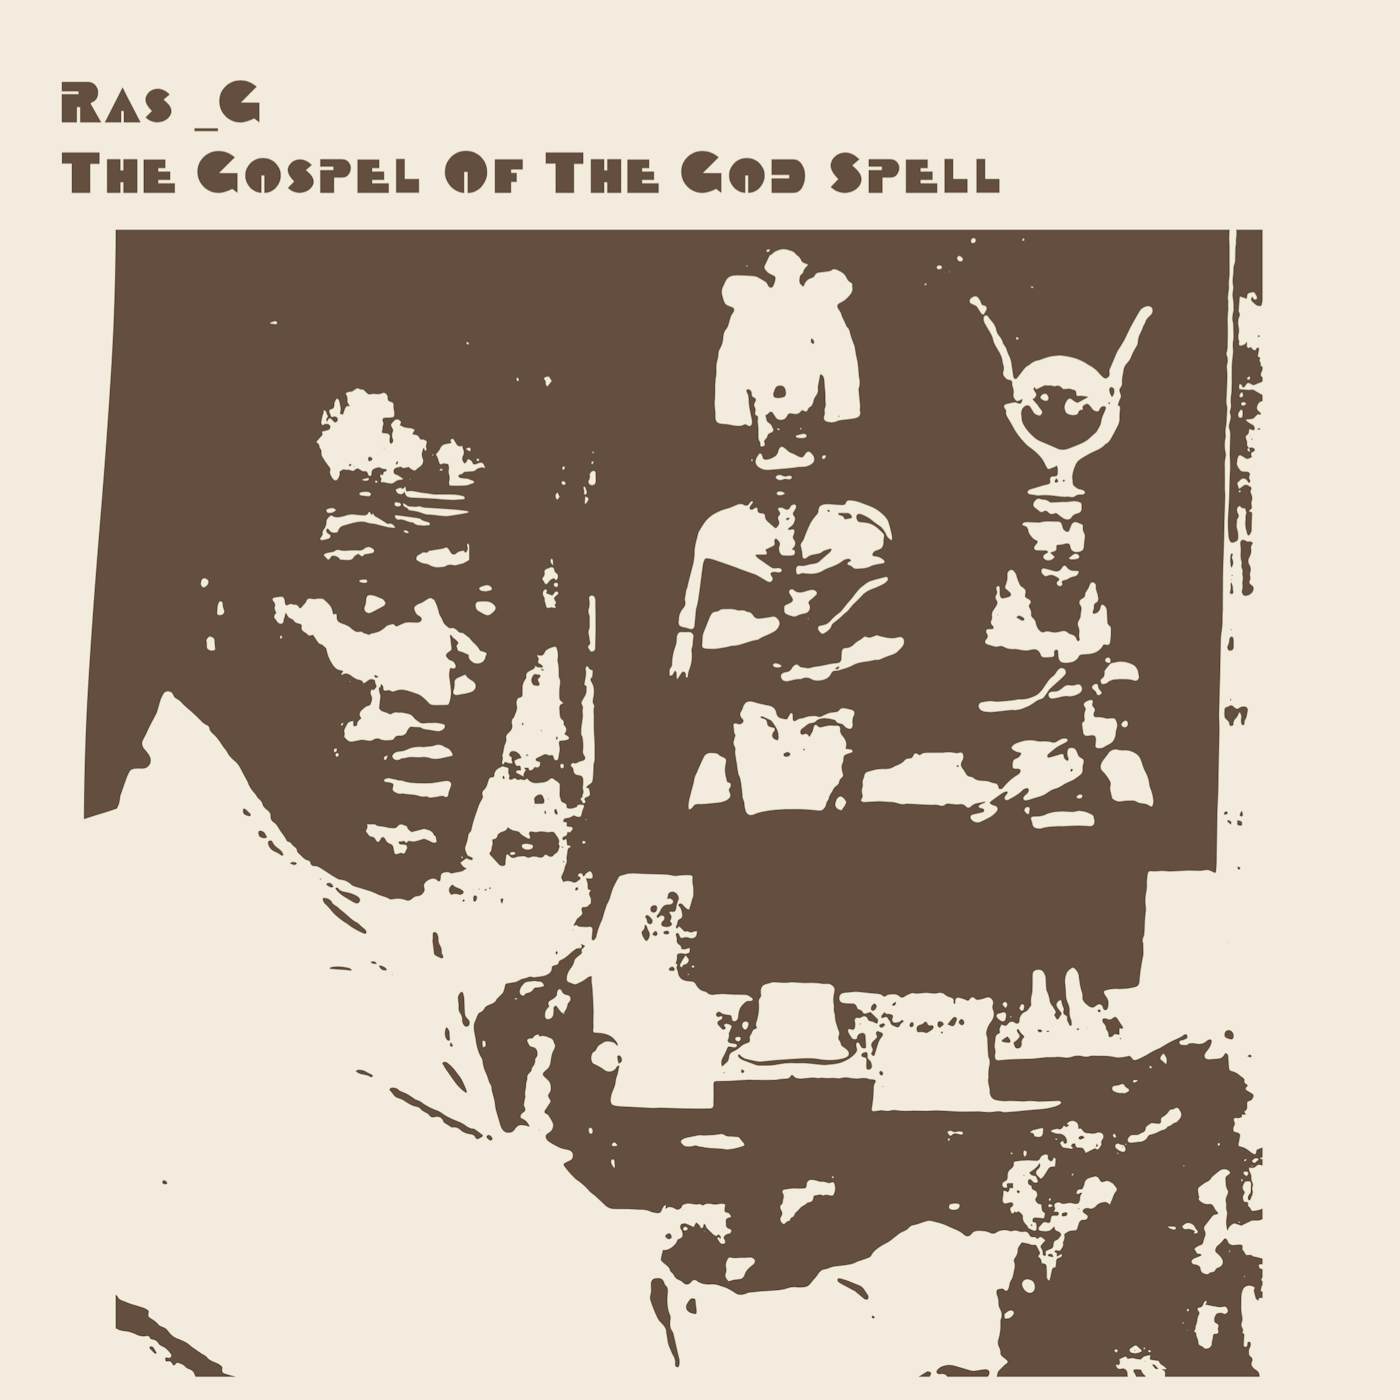 Ras G Gospel Of The God Spell Vinyl Record